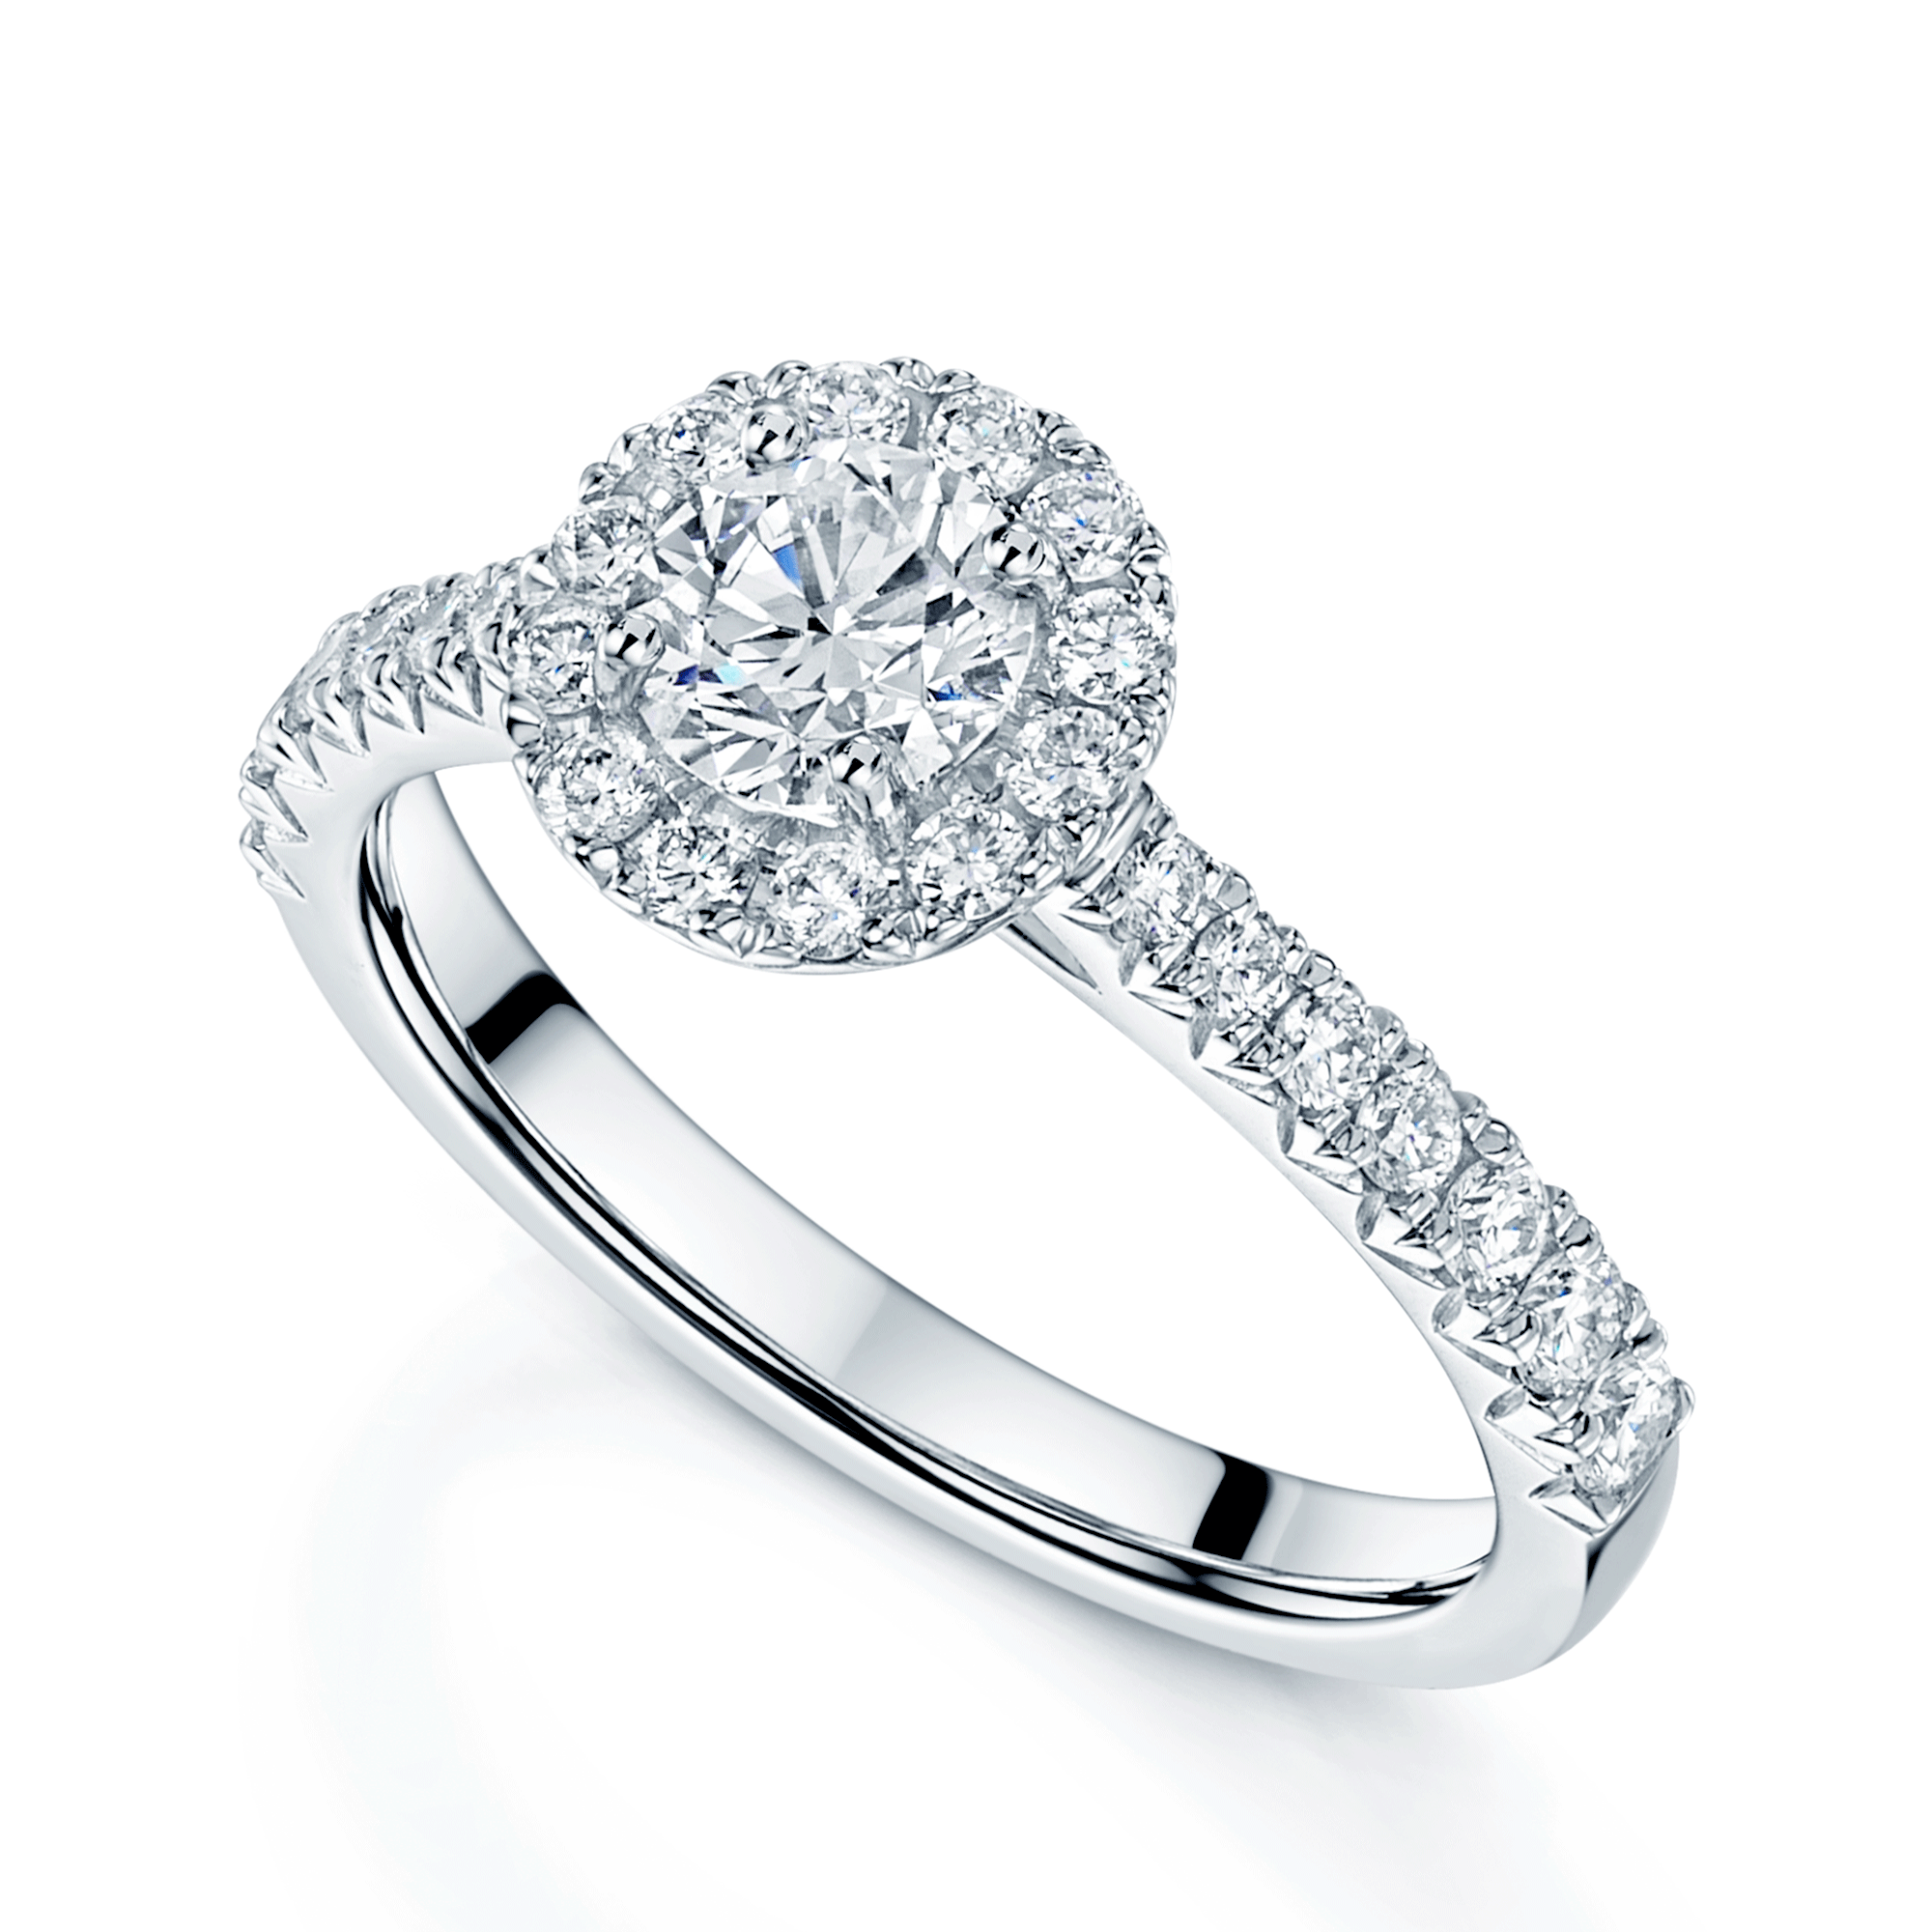 Platinum GIA Certificated Round Brilliant Cut Diamond Halo Ring With Diamond Set Shoulders